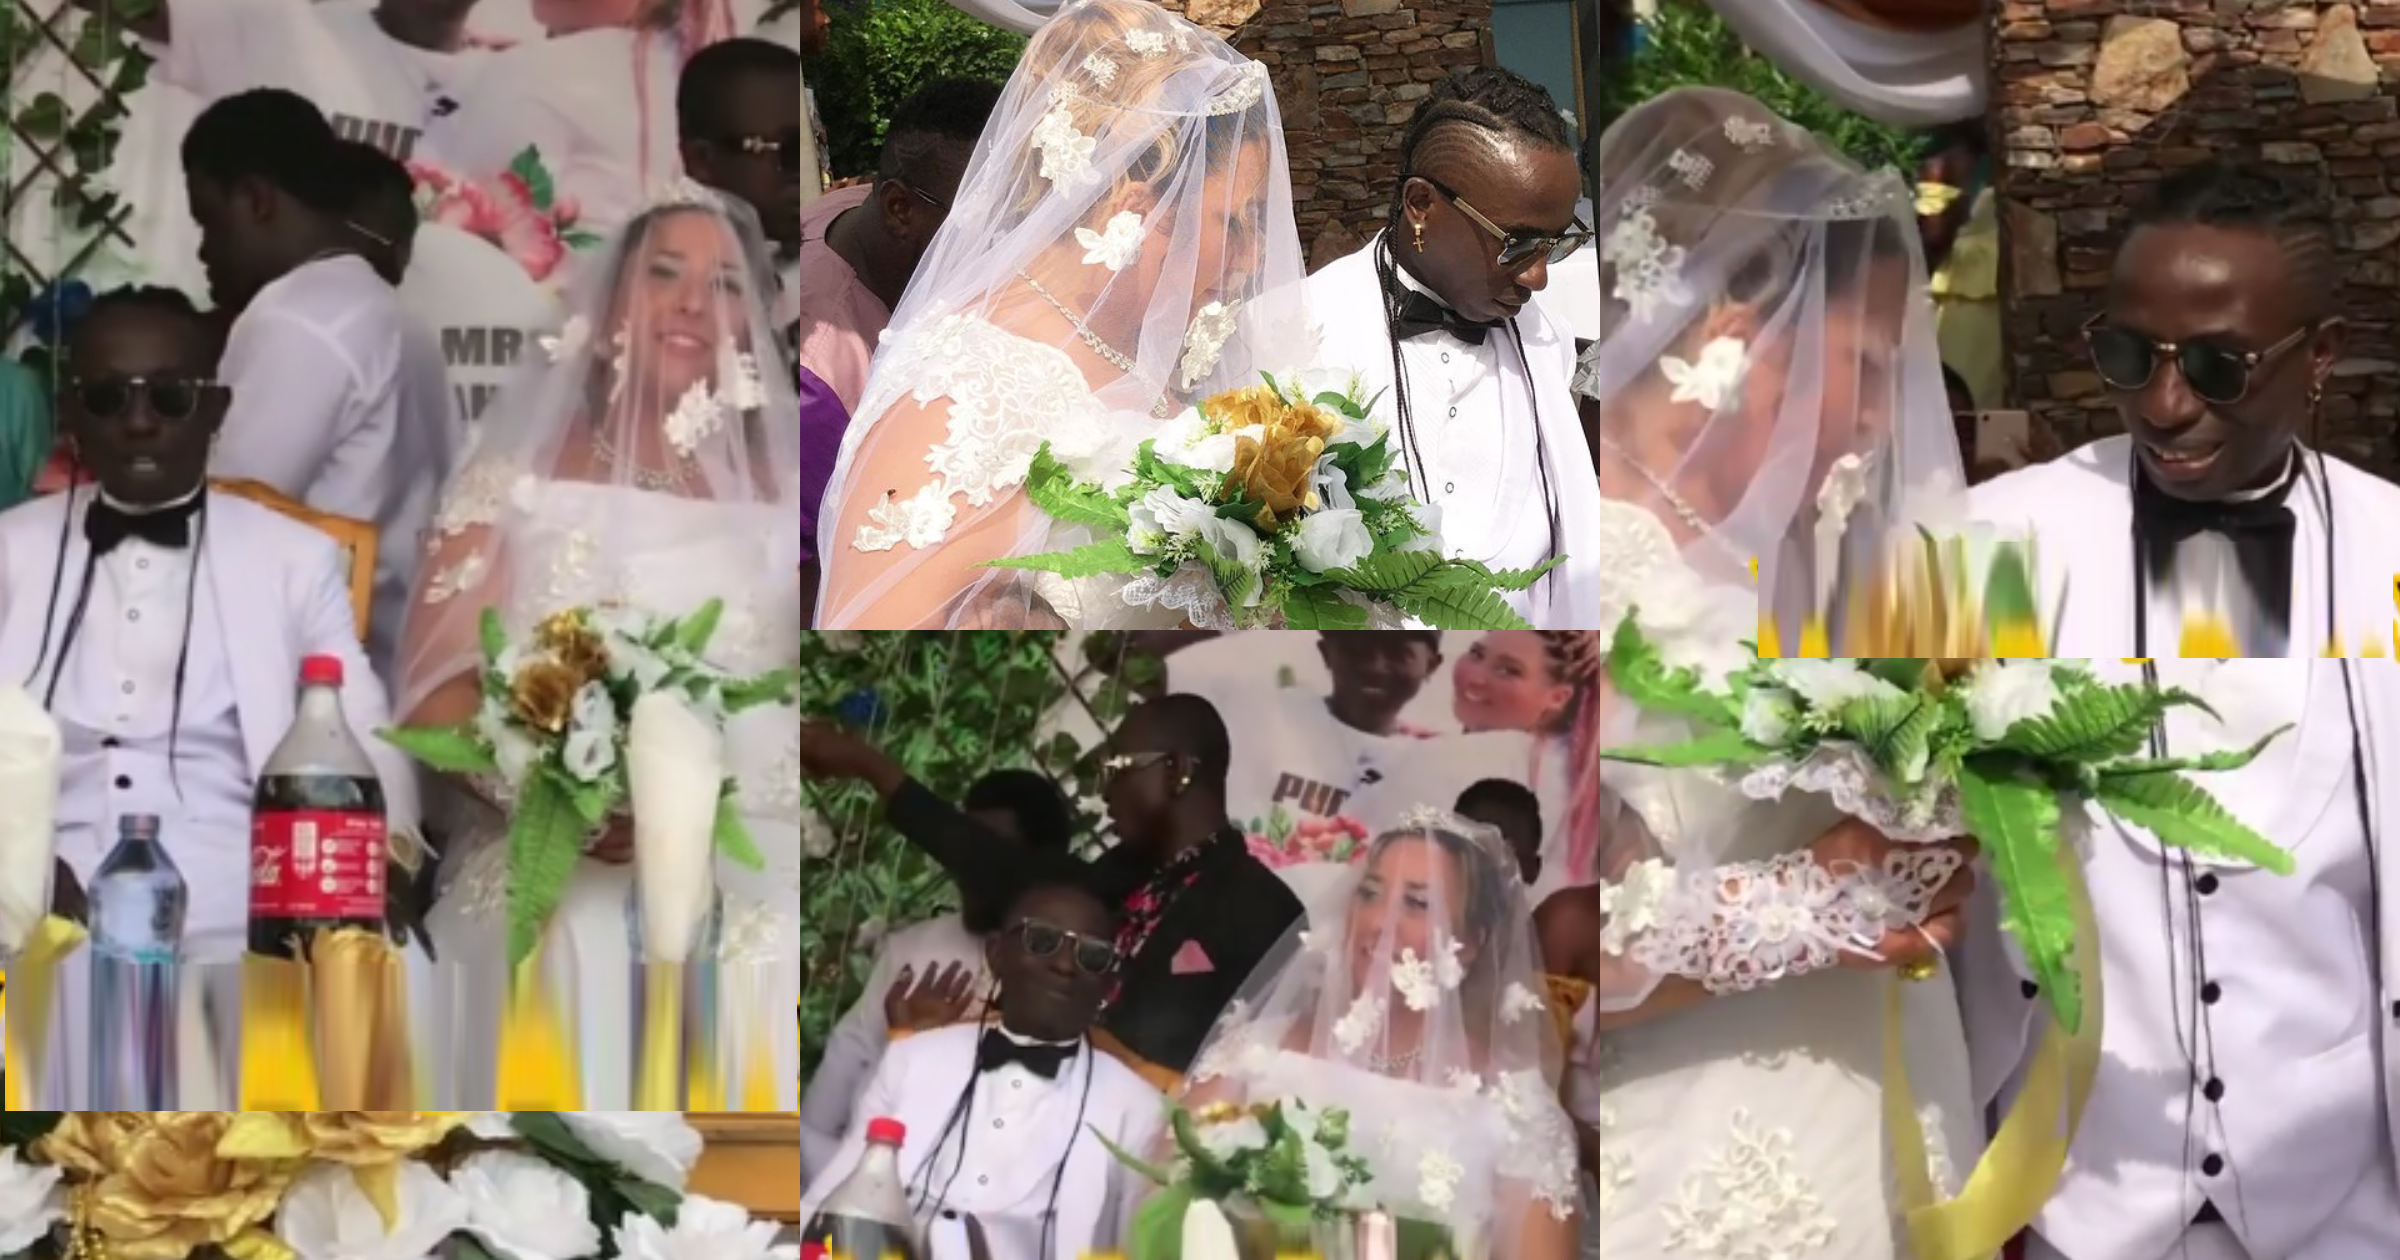 Patapaa and Liha Miiler white wedding: First video and photo drop